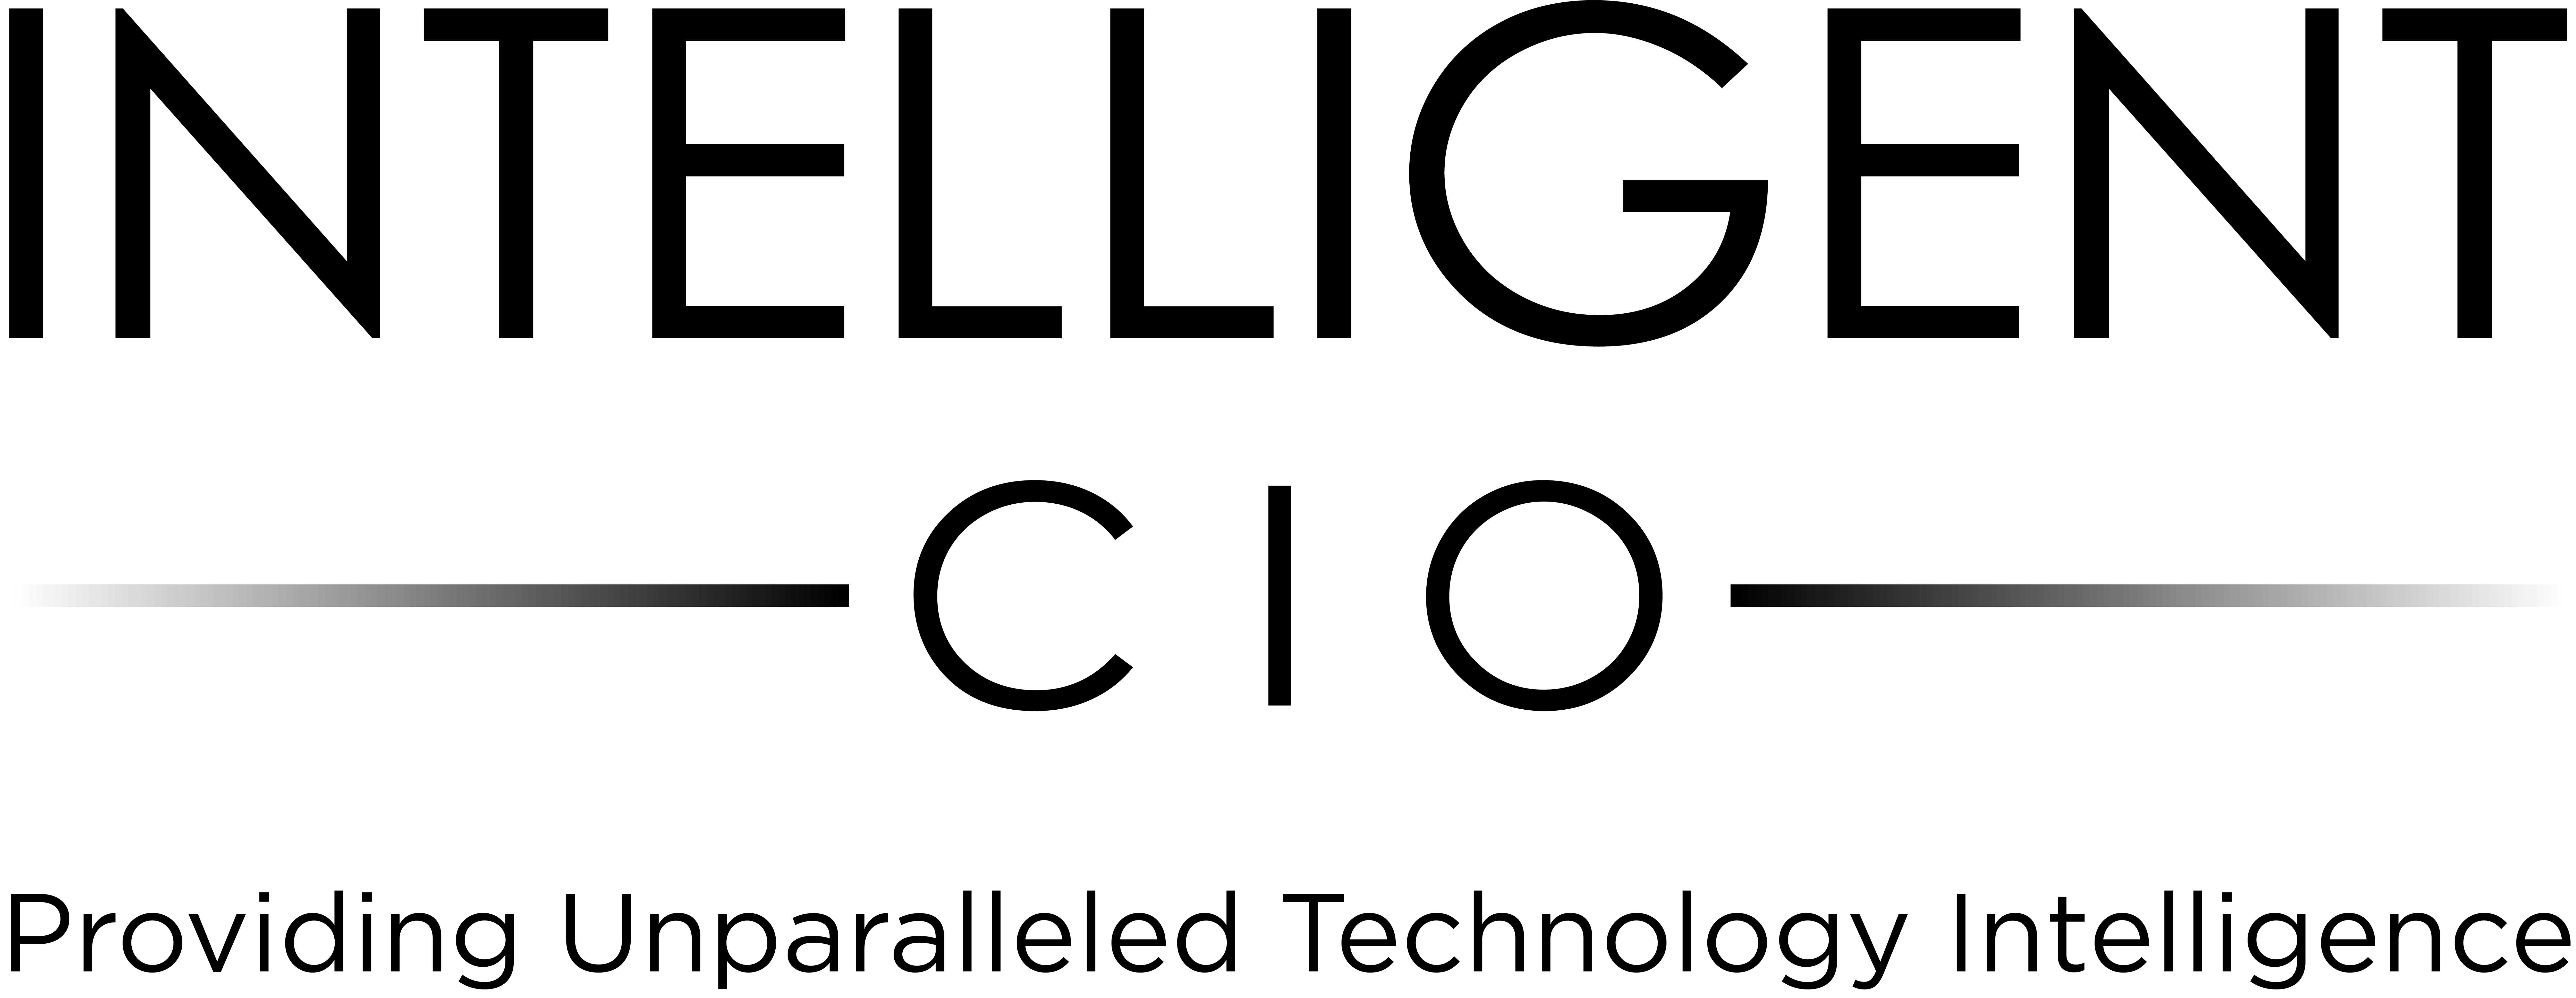 Intelligent CIO Logo